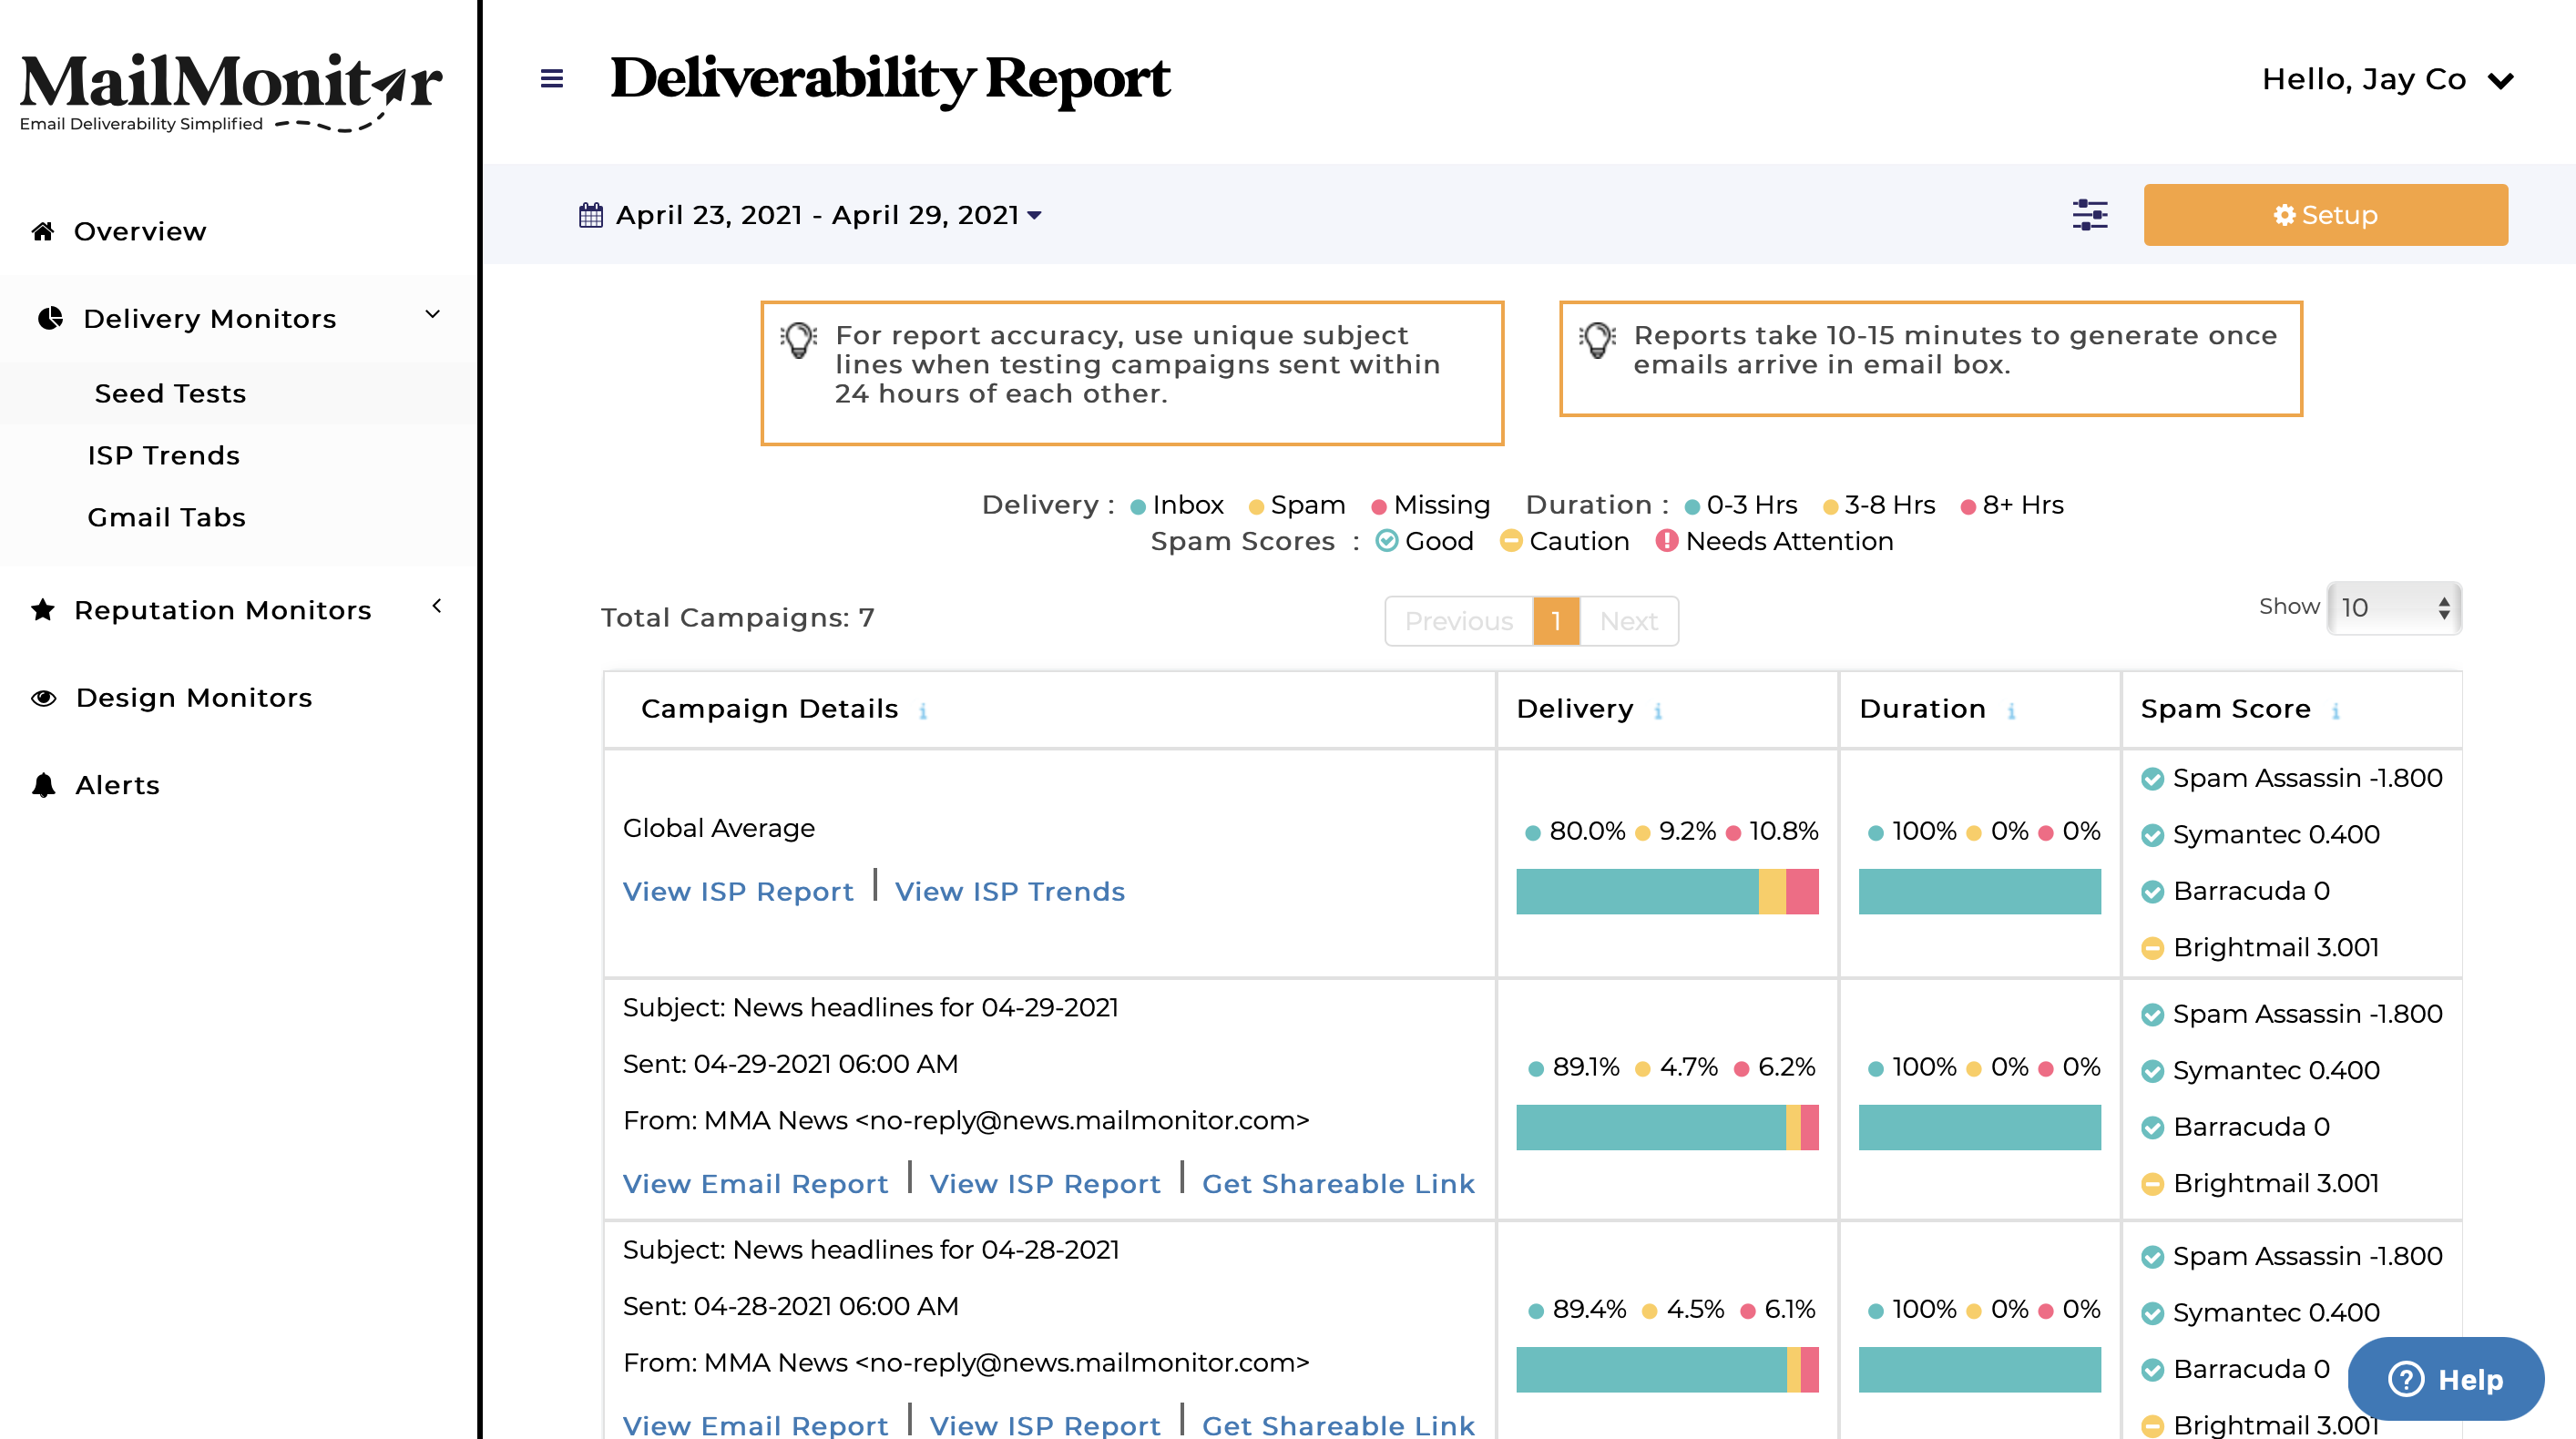 Deliverability Report